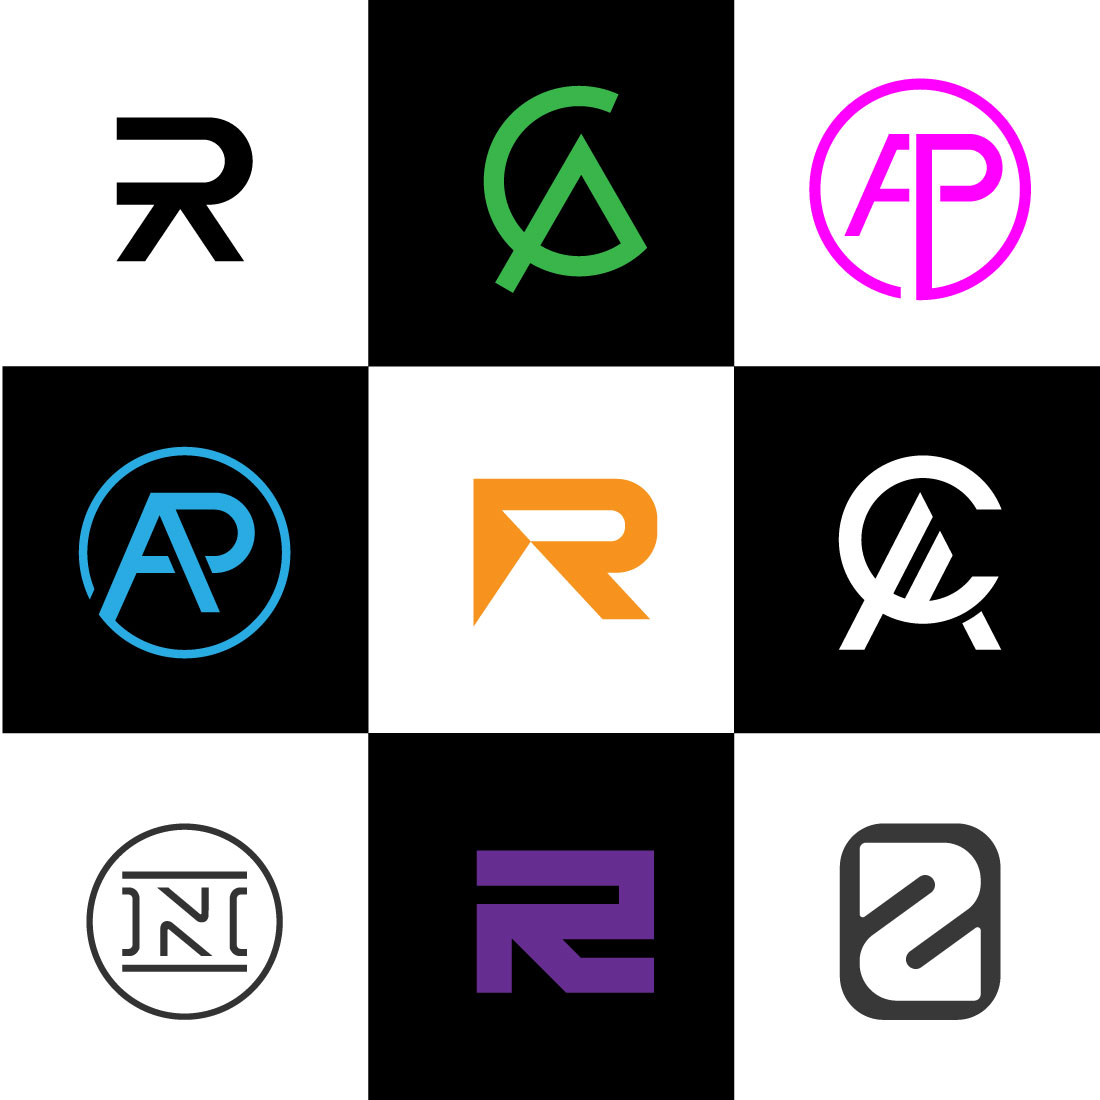 Simple Logo Letters Design Template Bundle cover image.